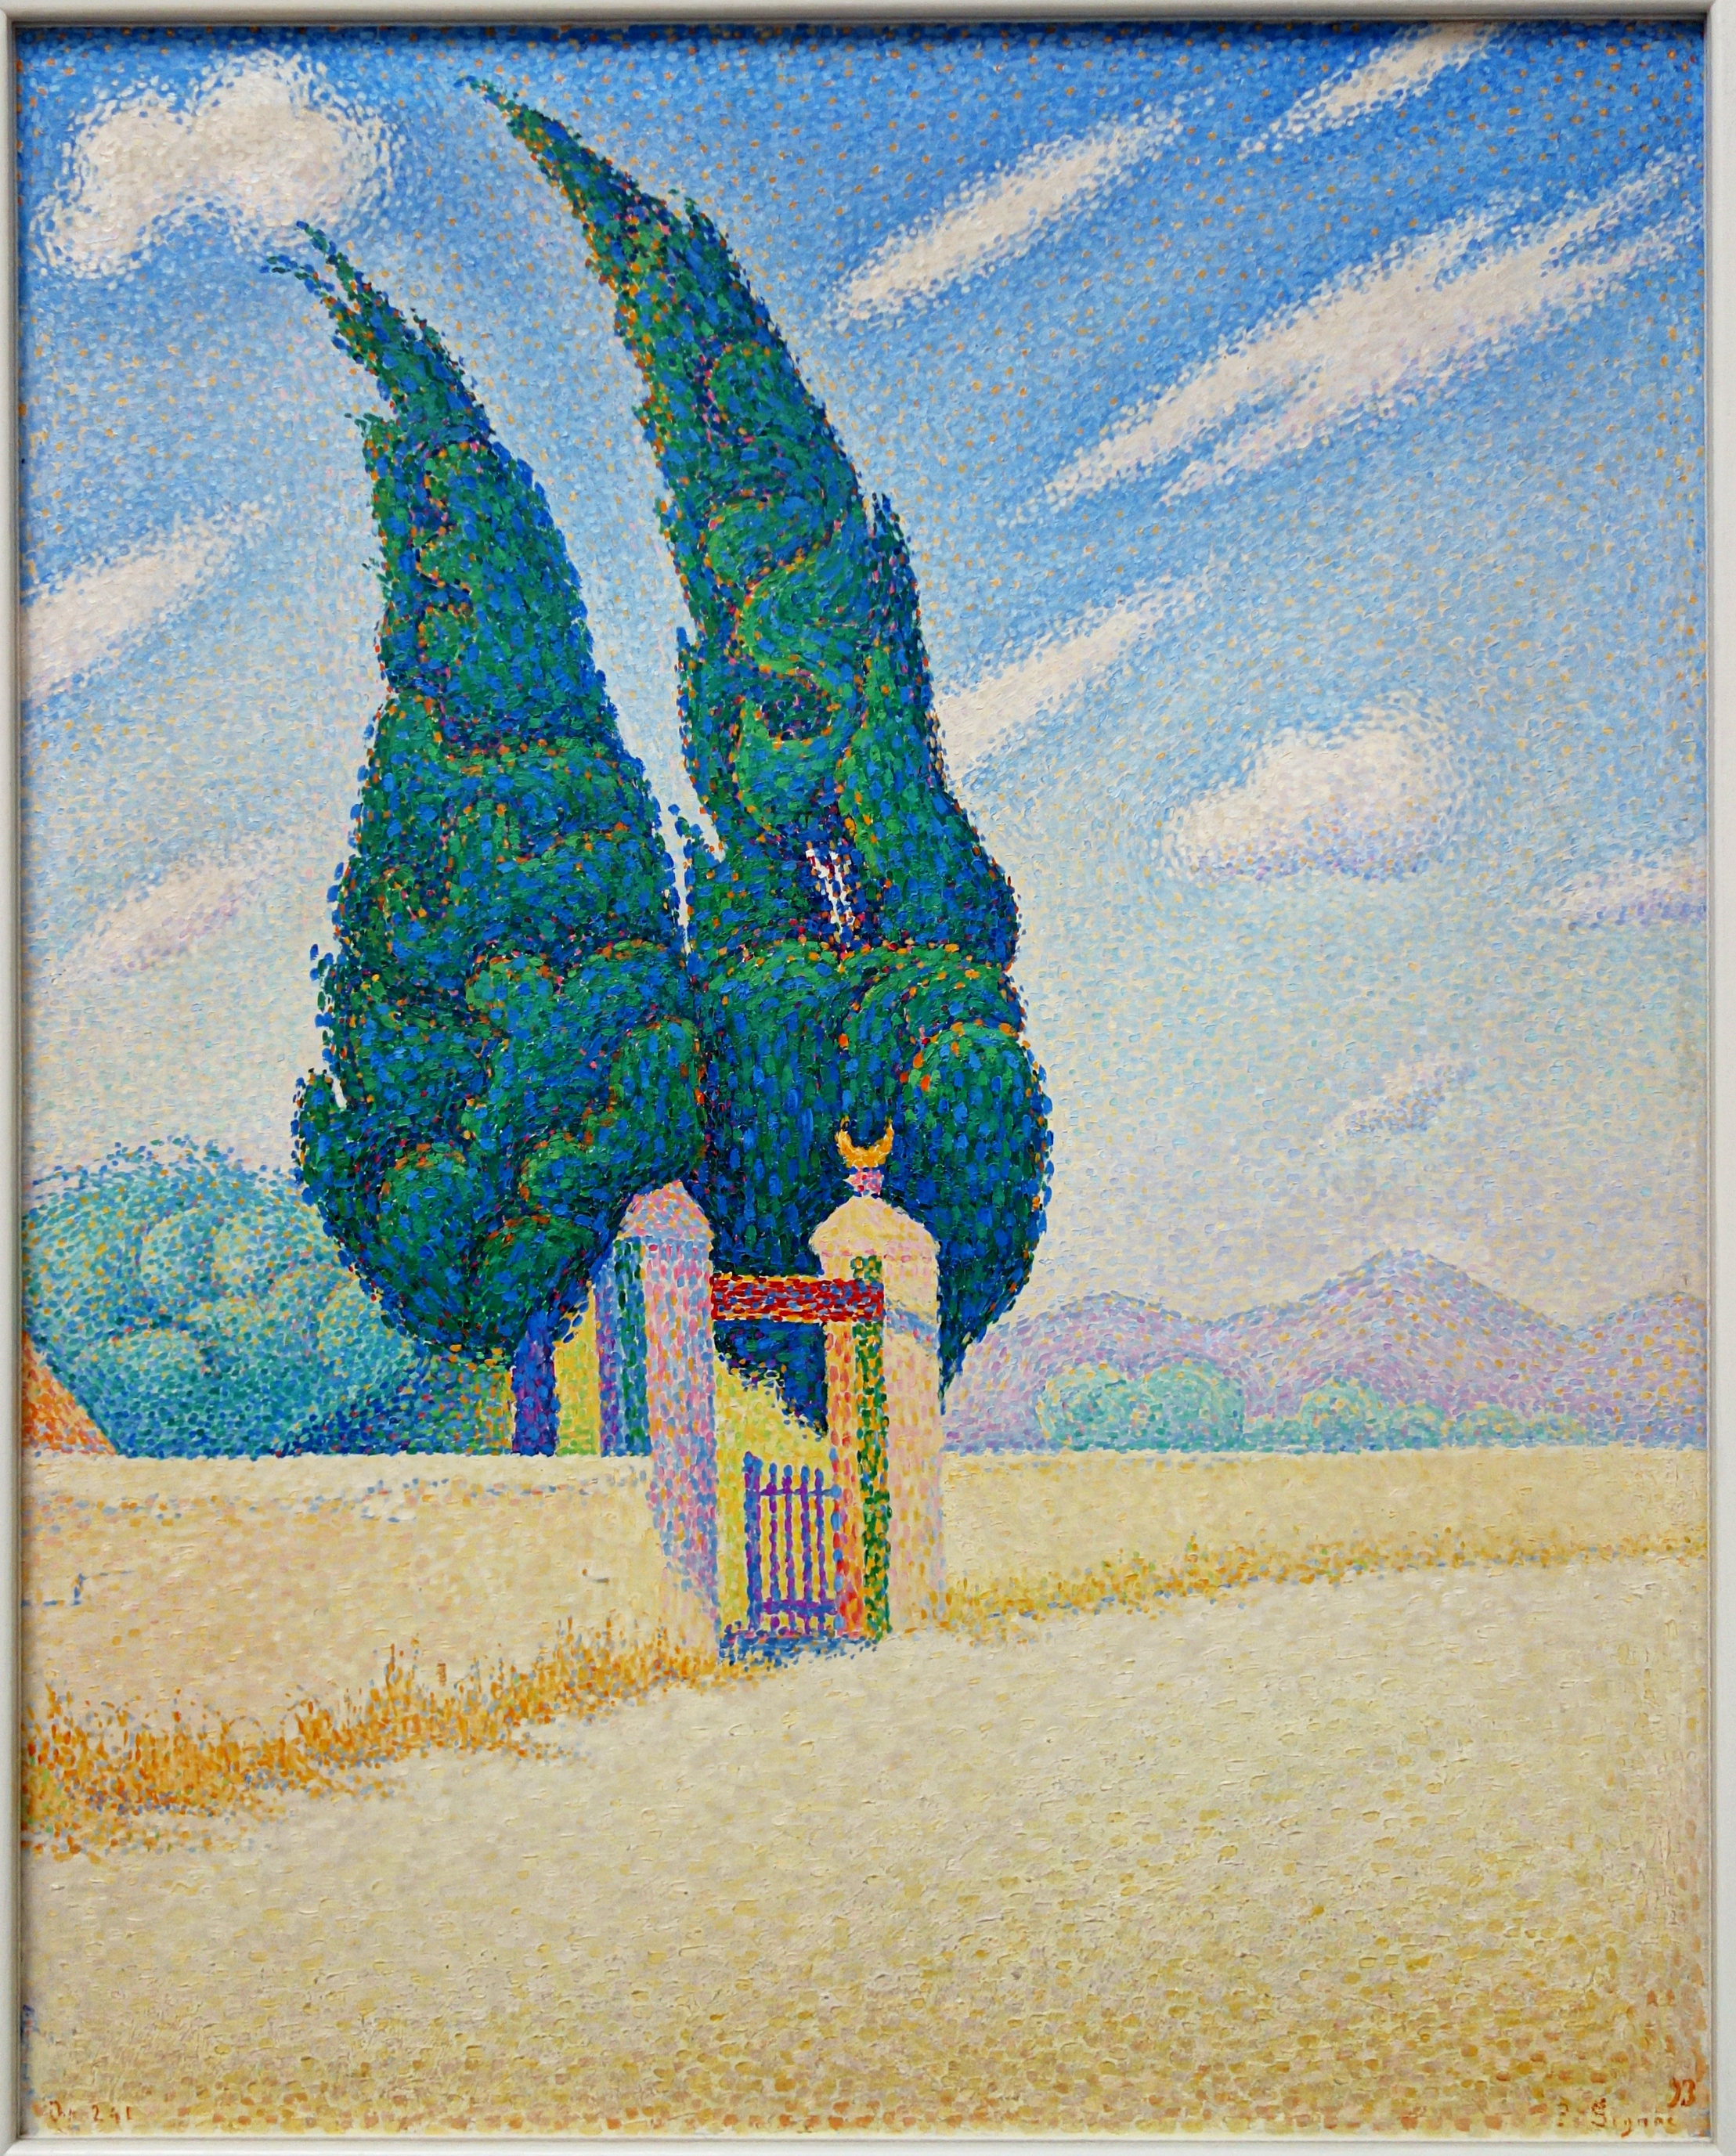 Dos cipreses by Paul Signac - 1893 - 80 x 64 cm Kröller-Müller Museum